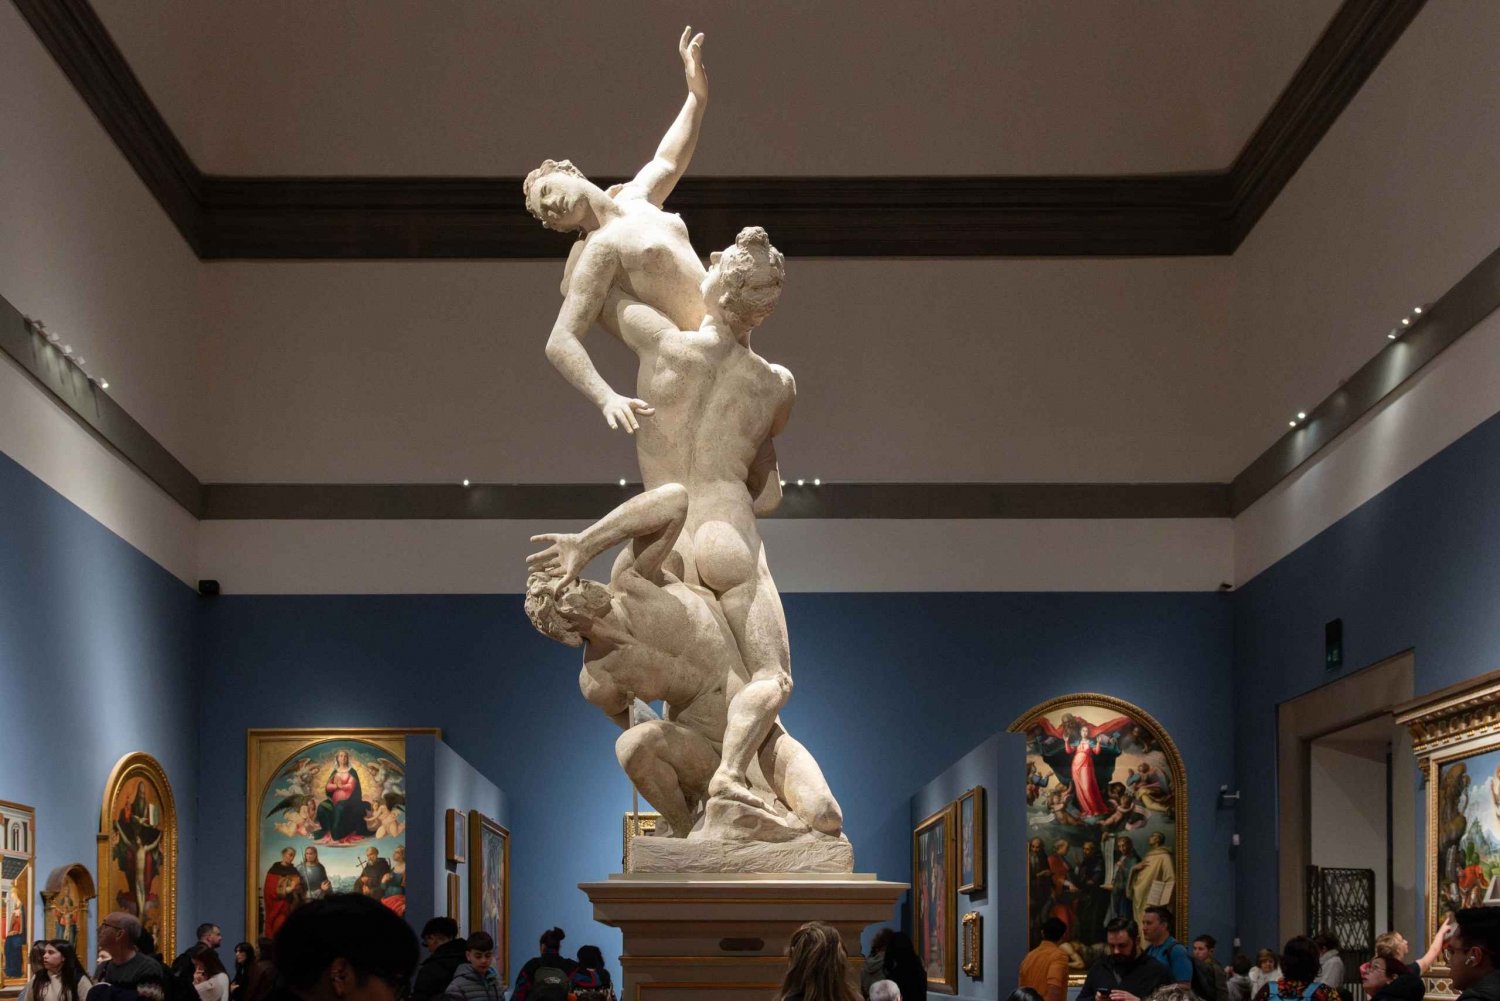 Florens: Uffizi och Accademia 3 timmars guidad tur